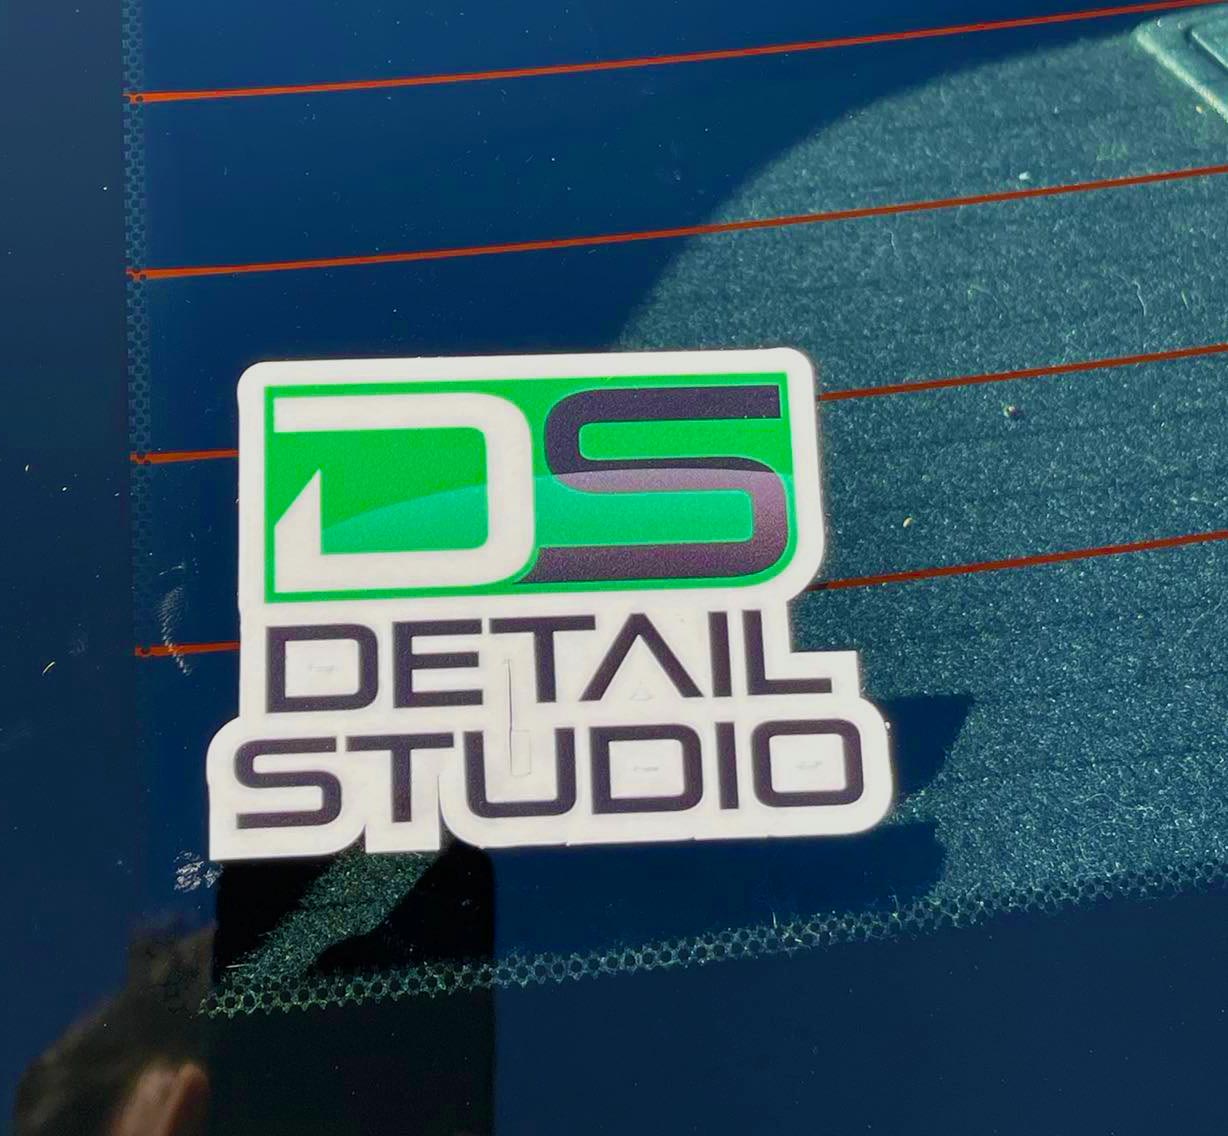 Detail Studio 3" x 3" Vinyl Decal